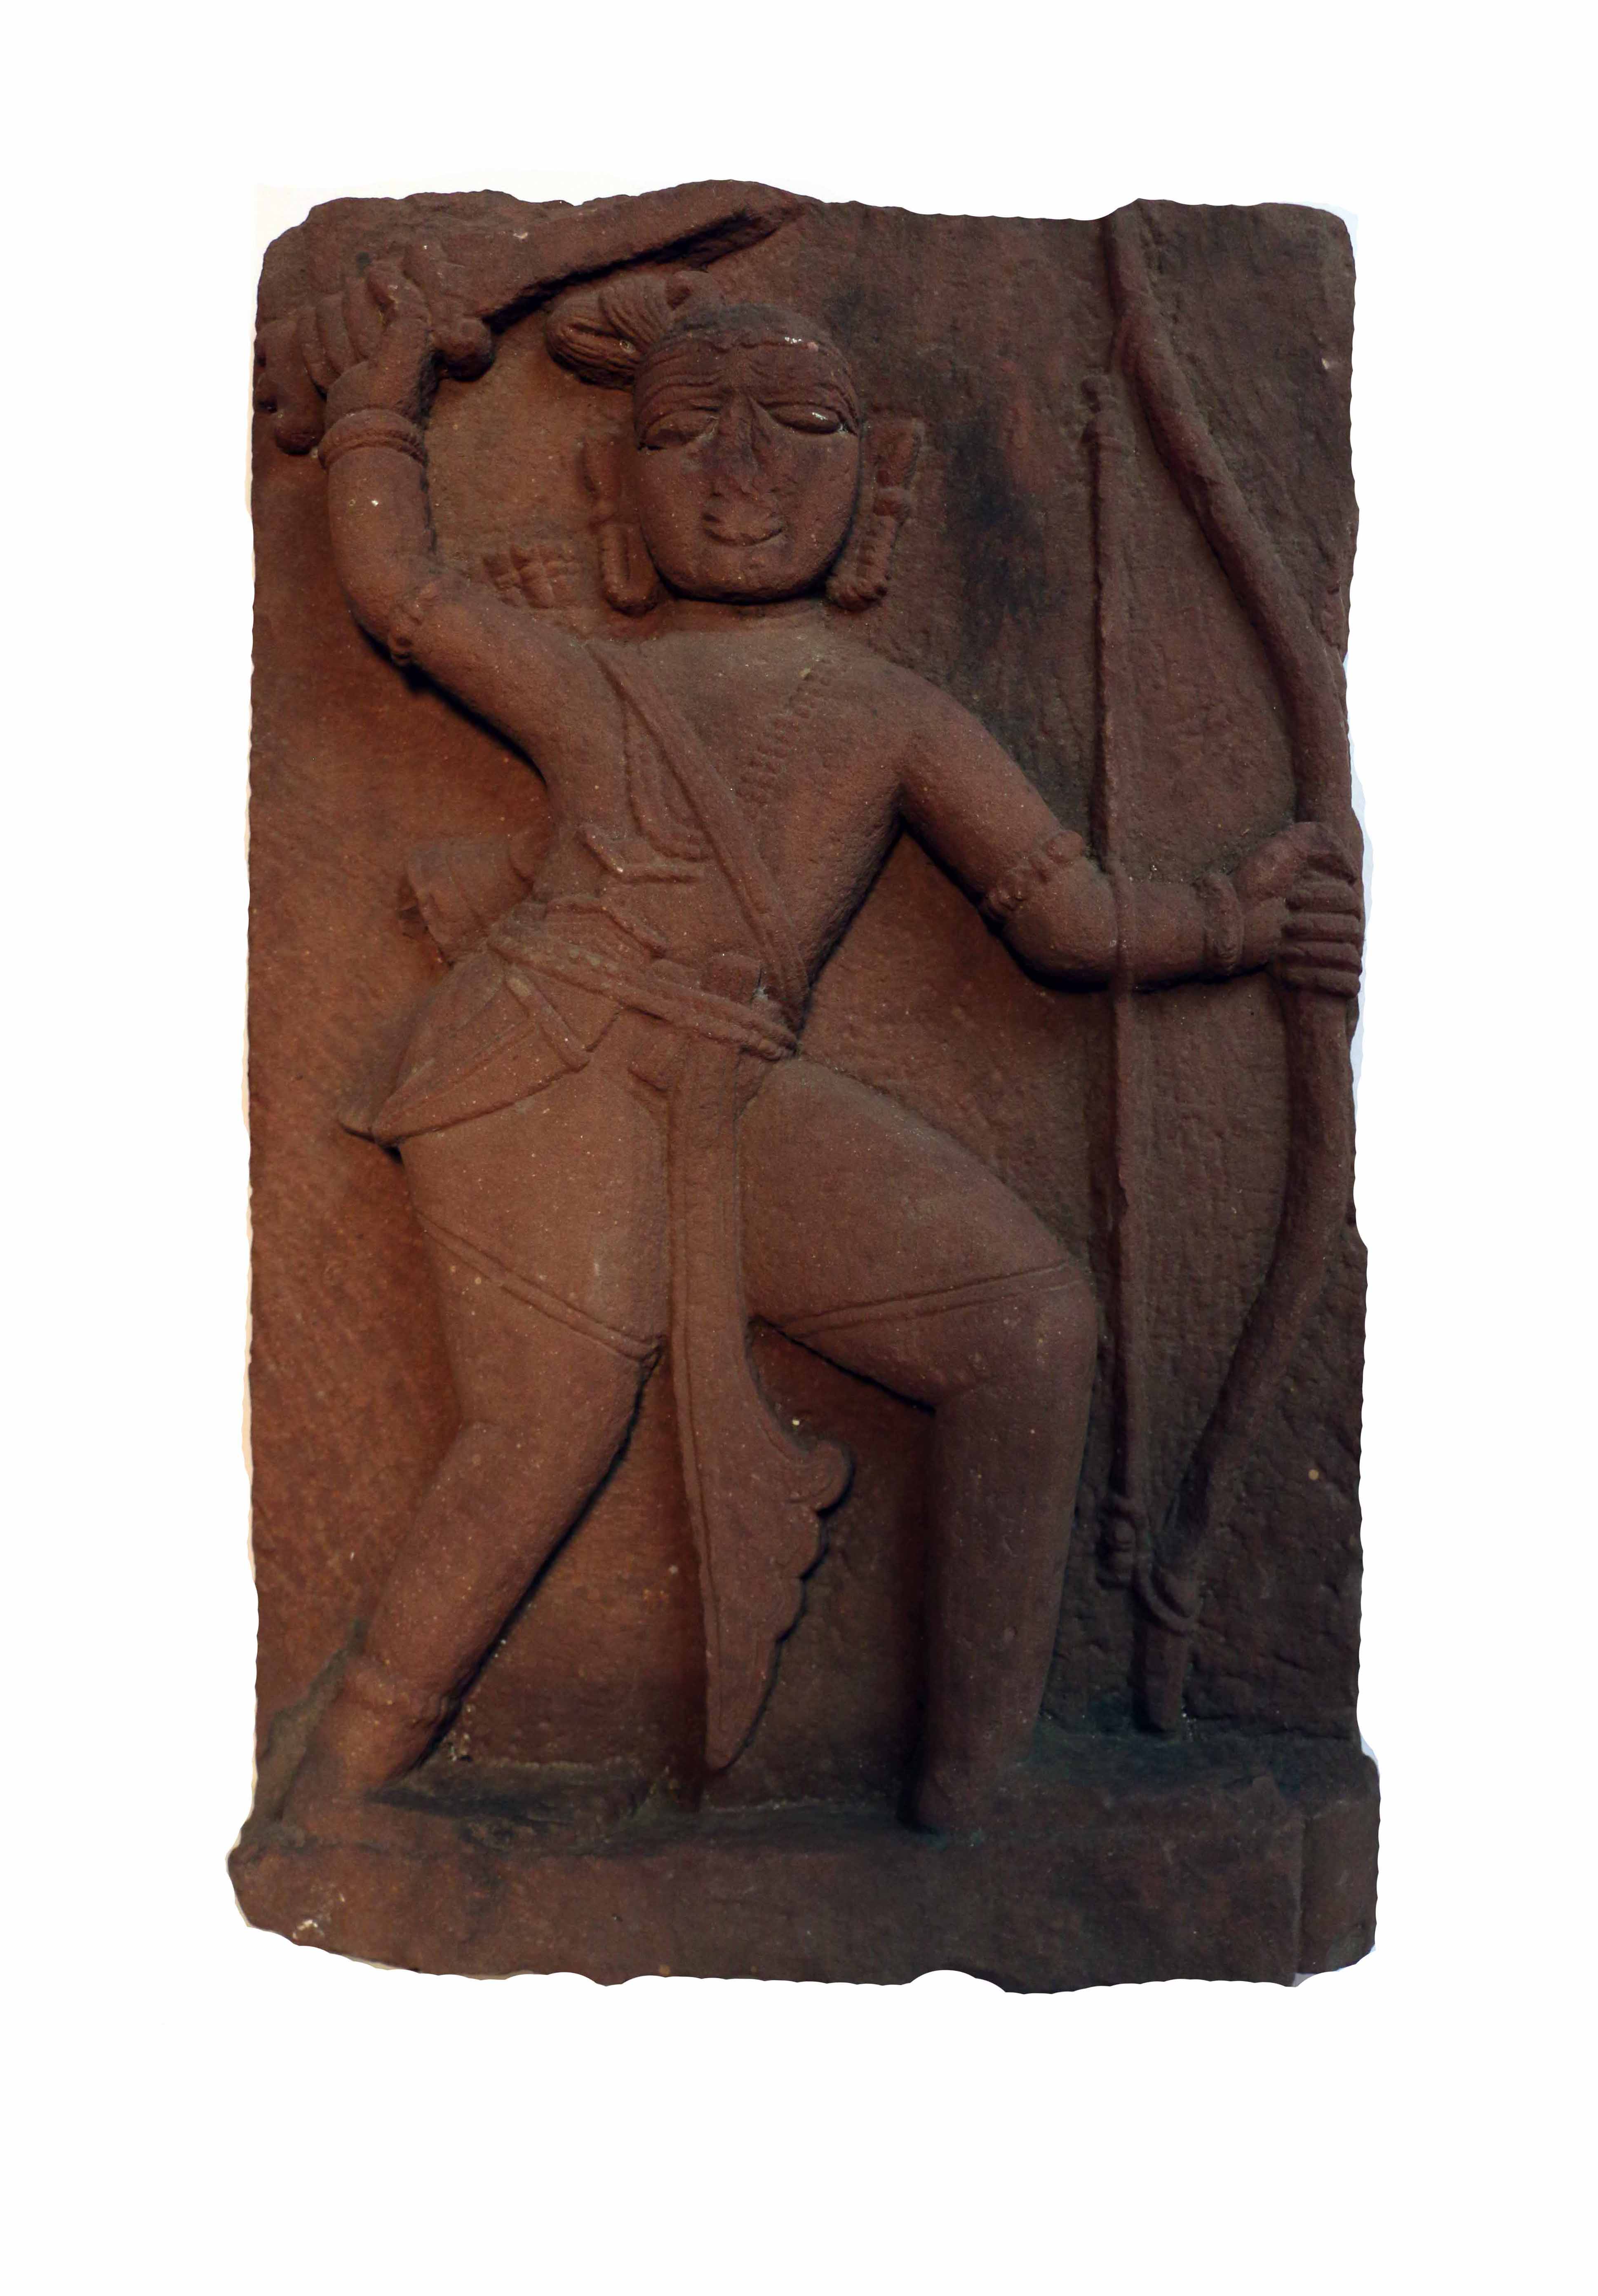 Rama with Bow and Arrow